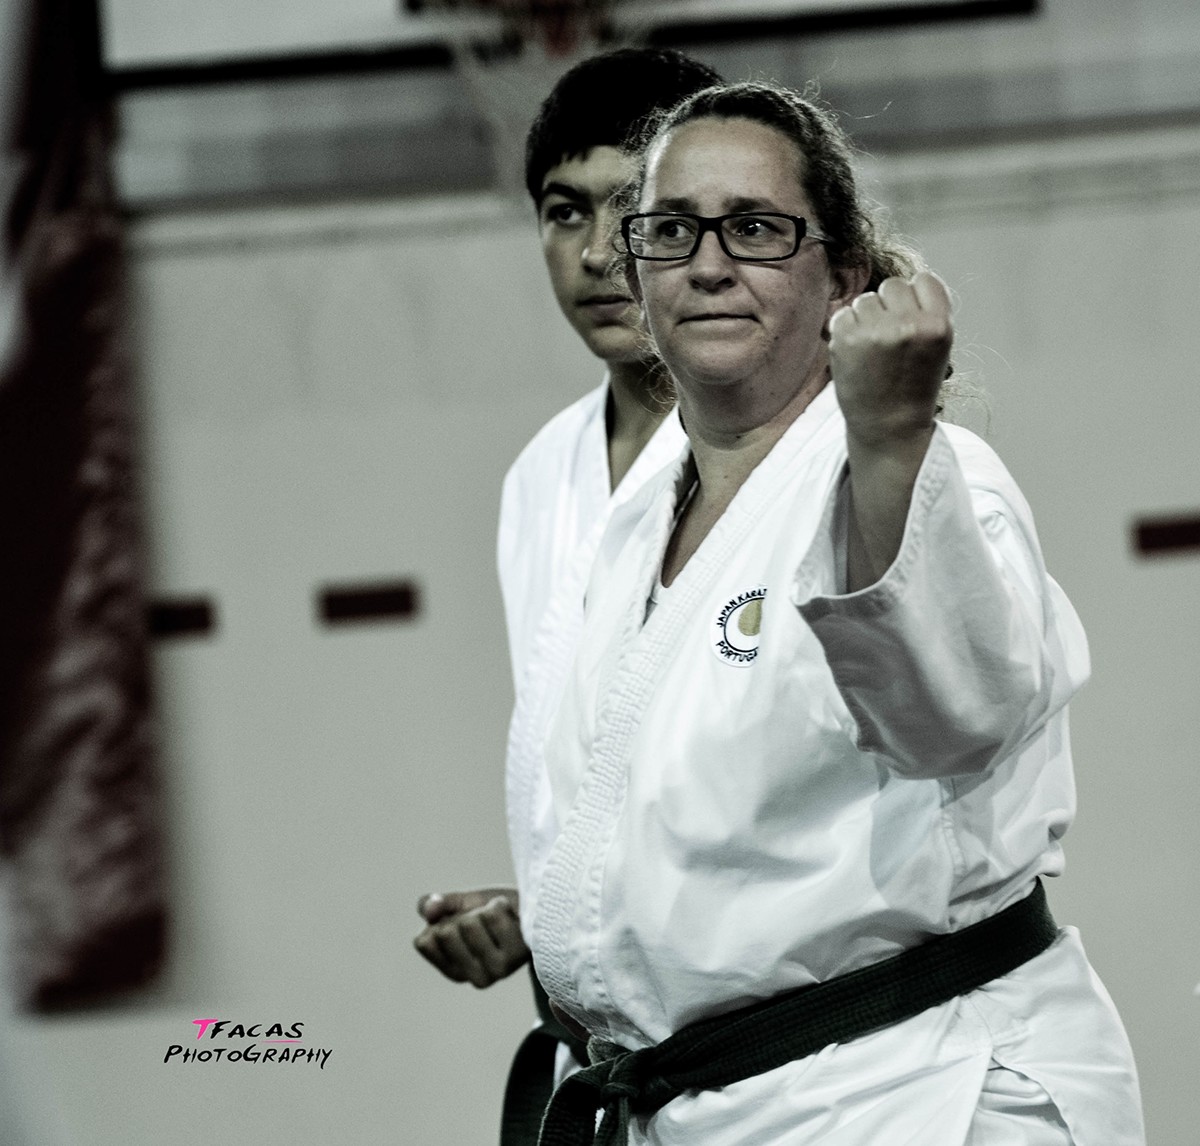 TFacas Photography karate JKA Desporto